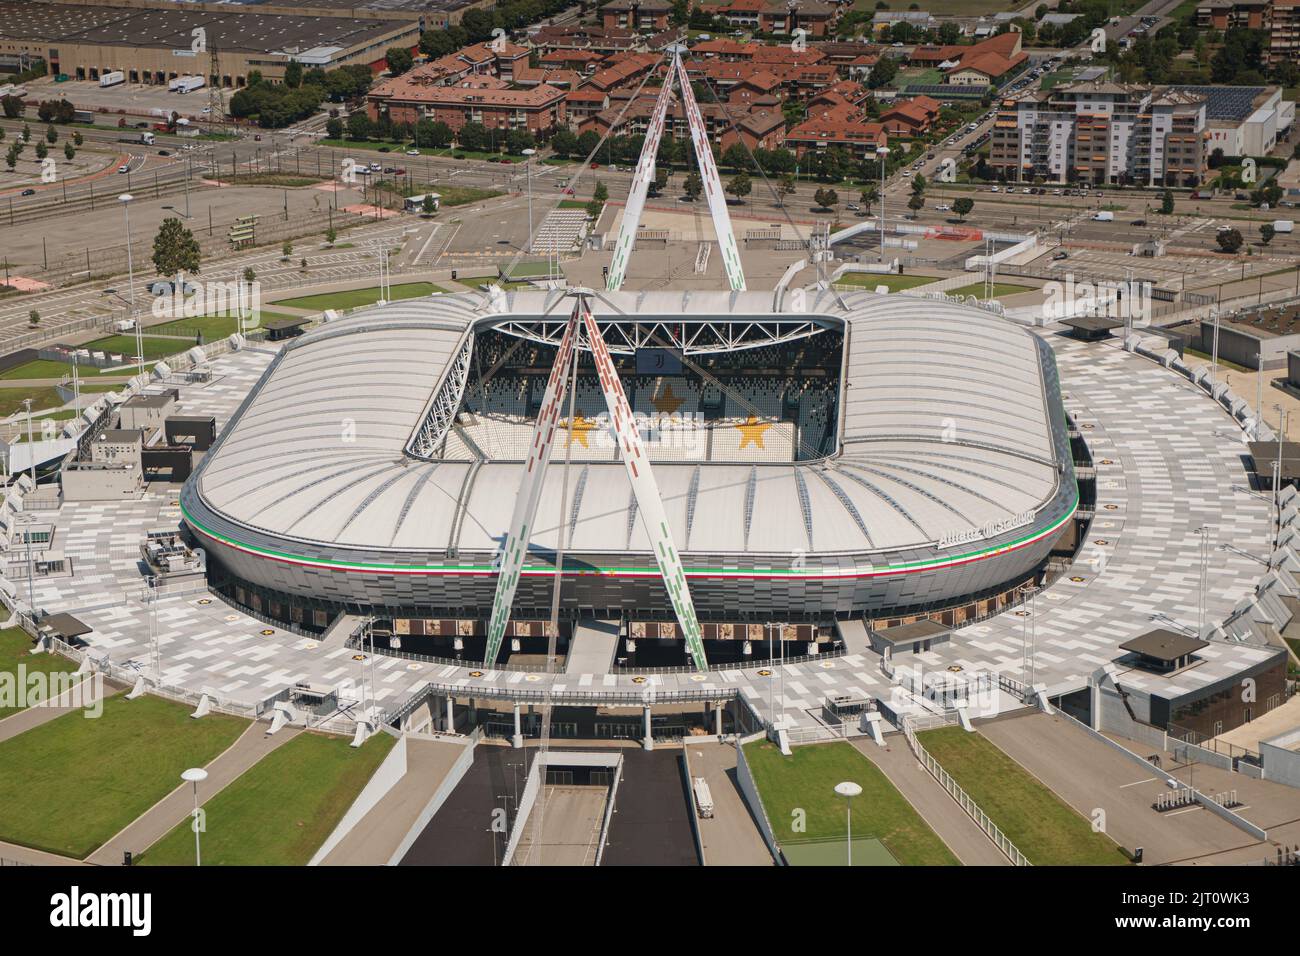 Vista aérea del estadio Juventus Allianz. Turín, Italia Foto de stock